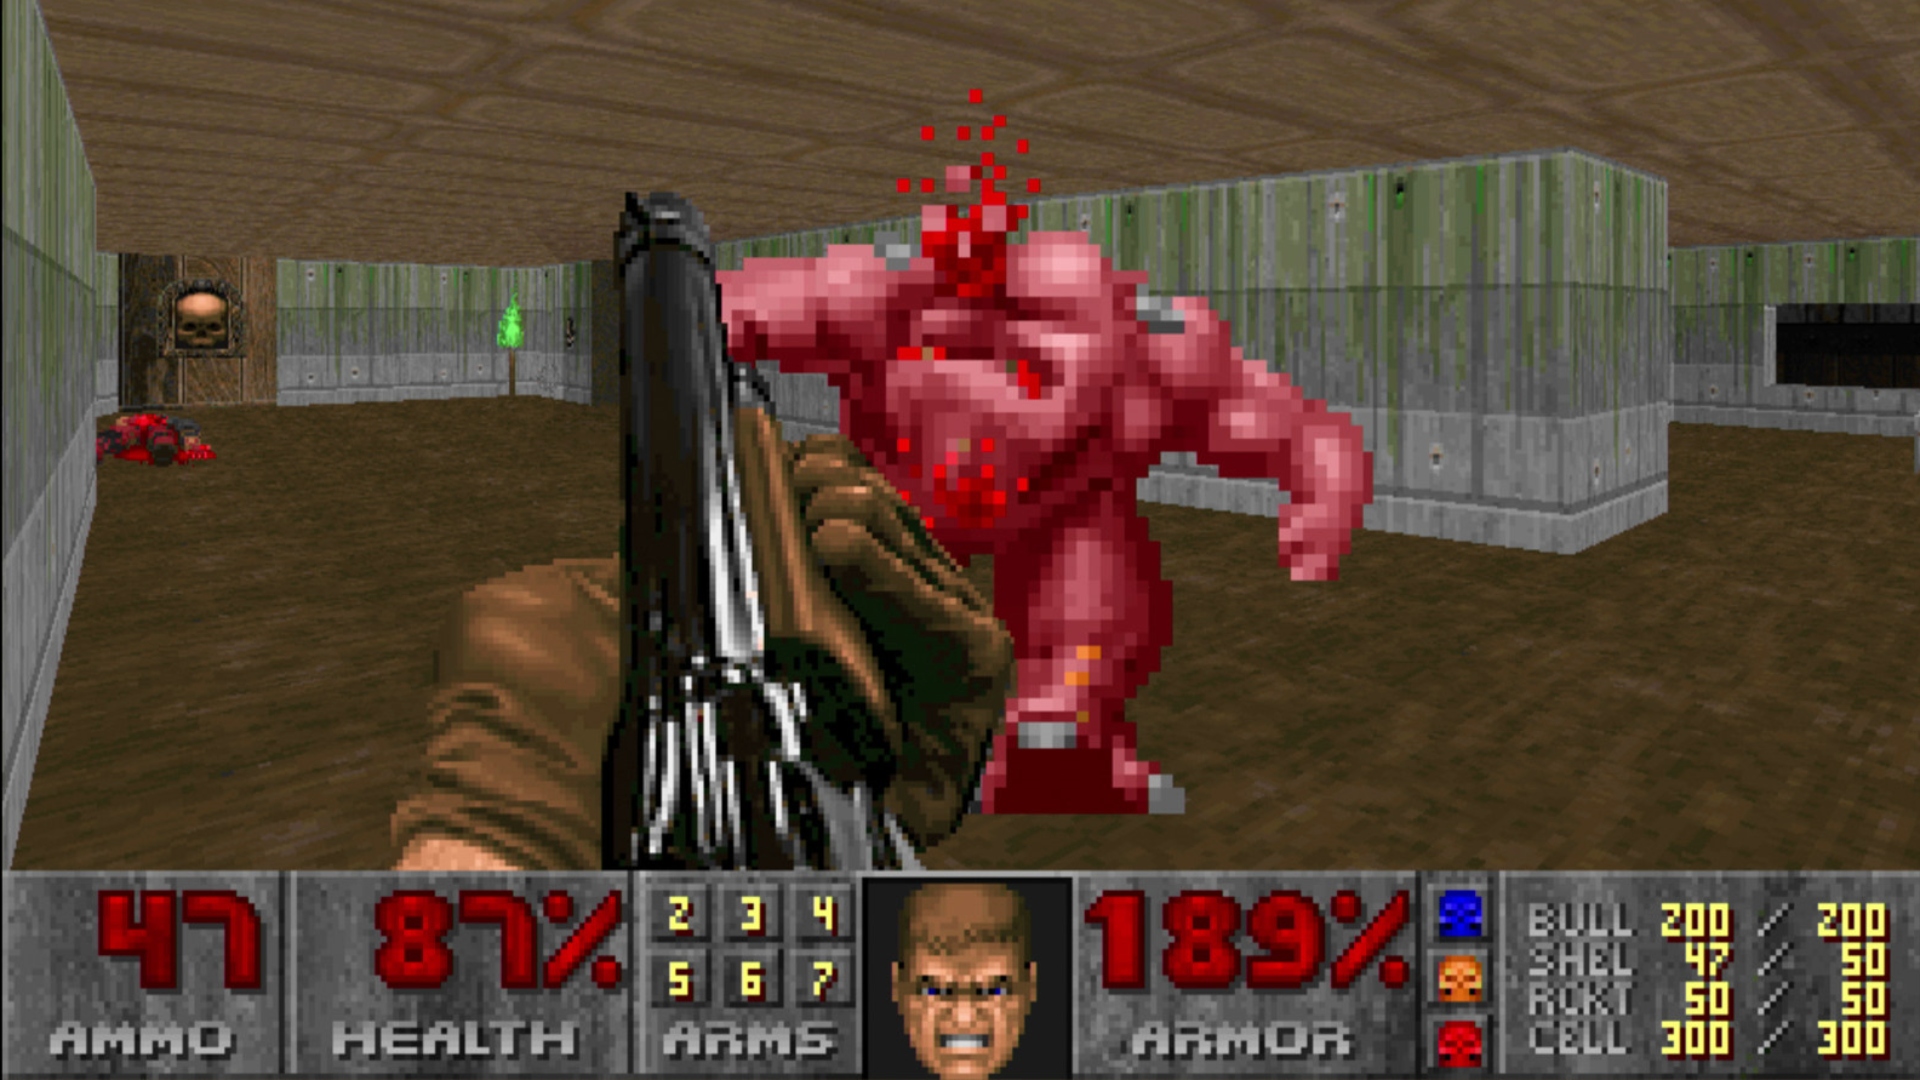 Doom new speedrun record: A monster is shot in id Software FPS game Doom